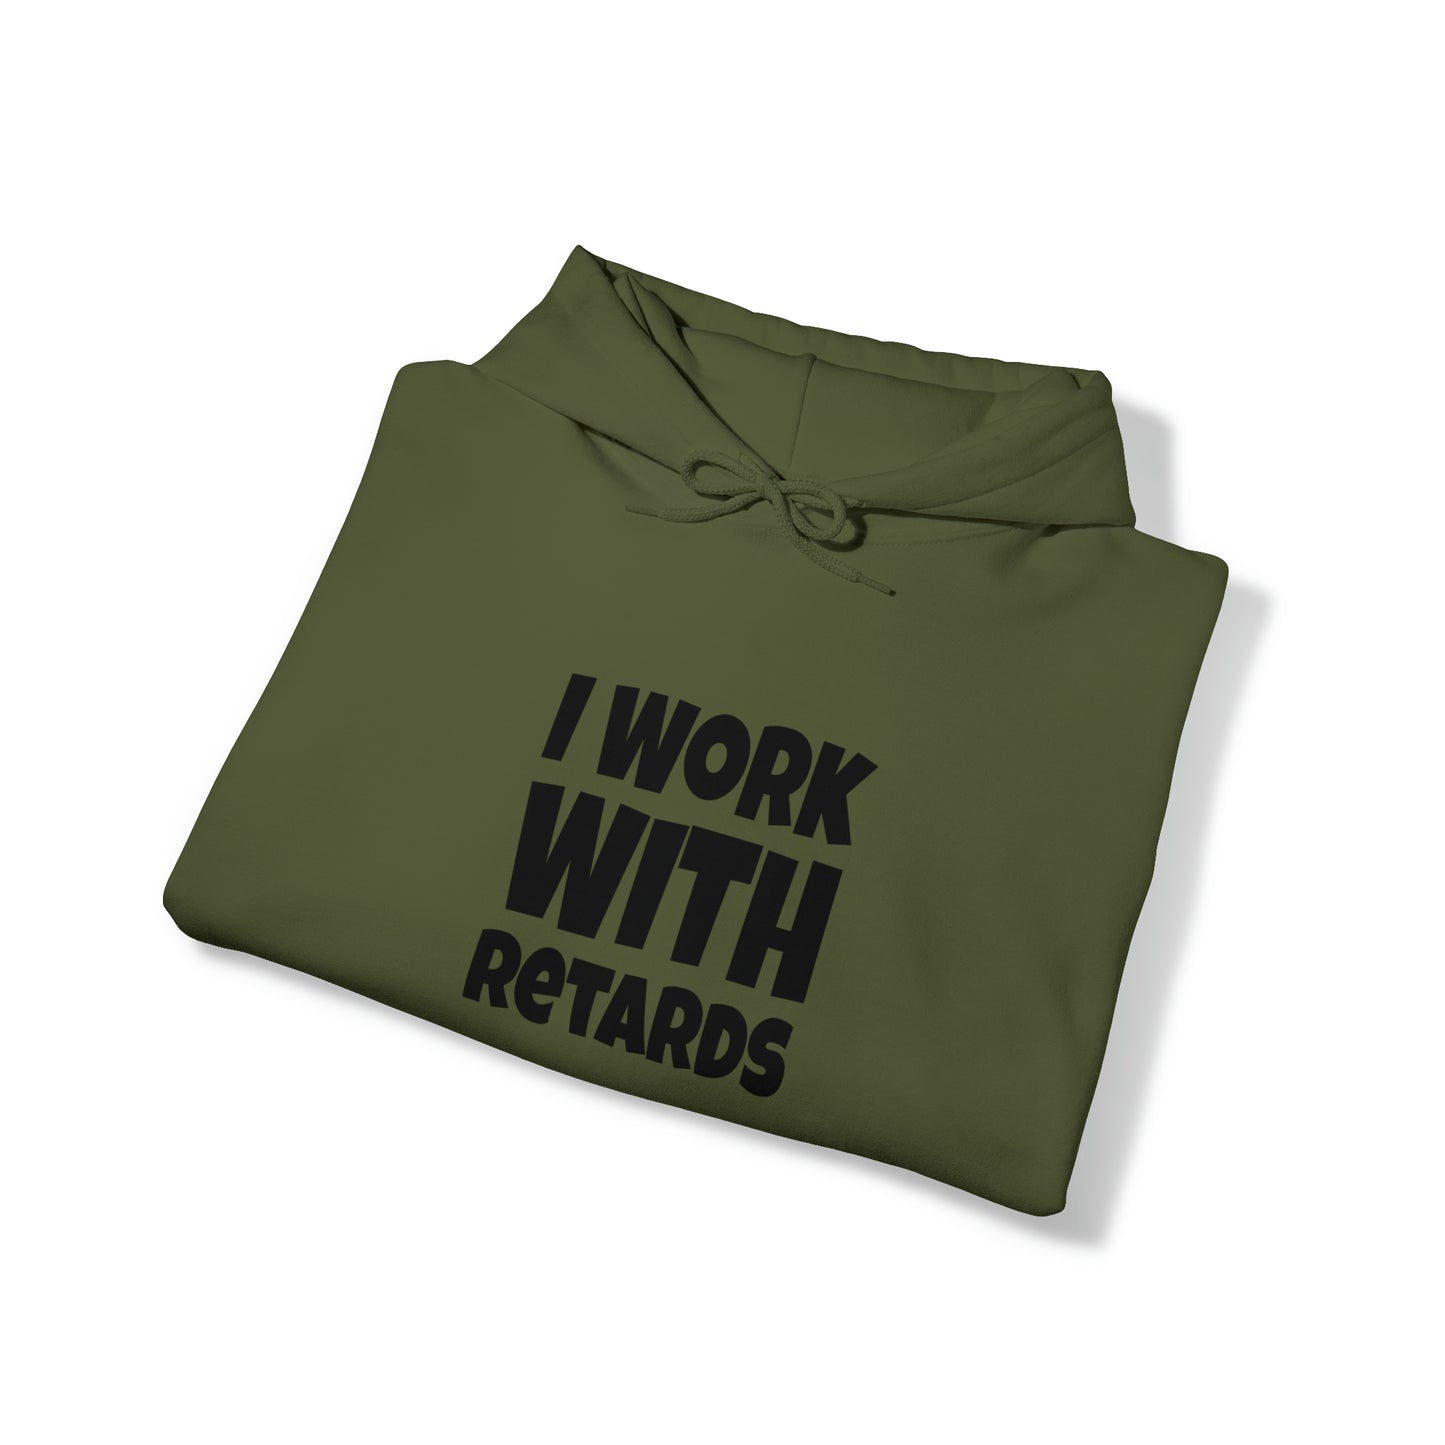 I Work with Retards - Hooded Sweatshirt